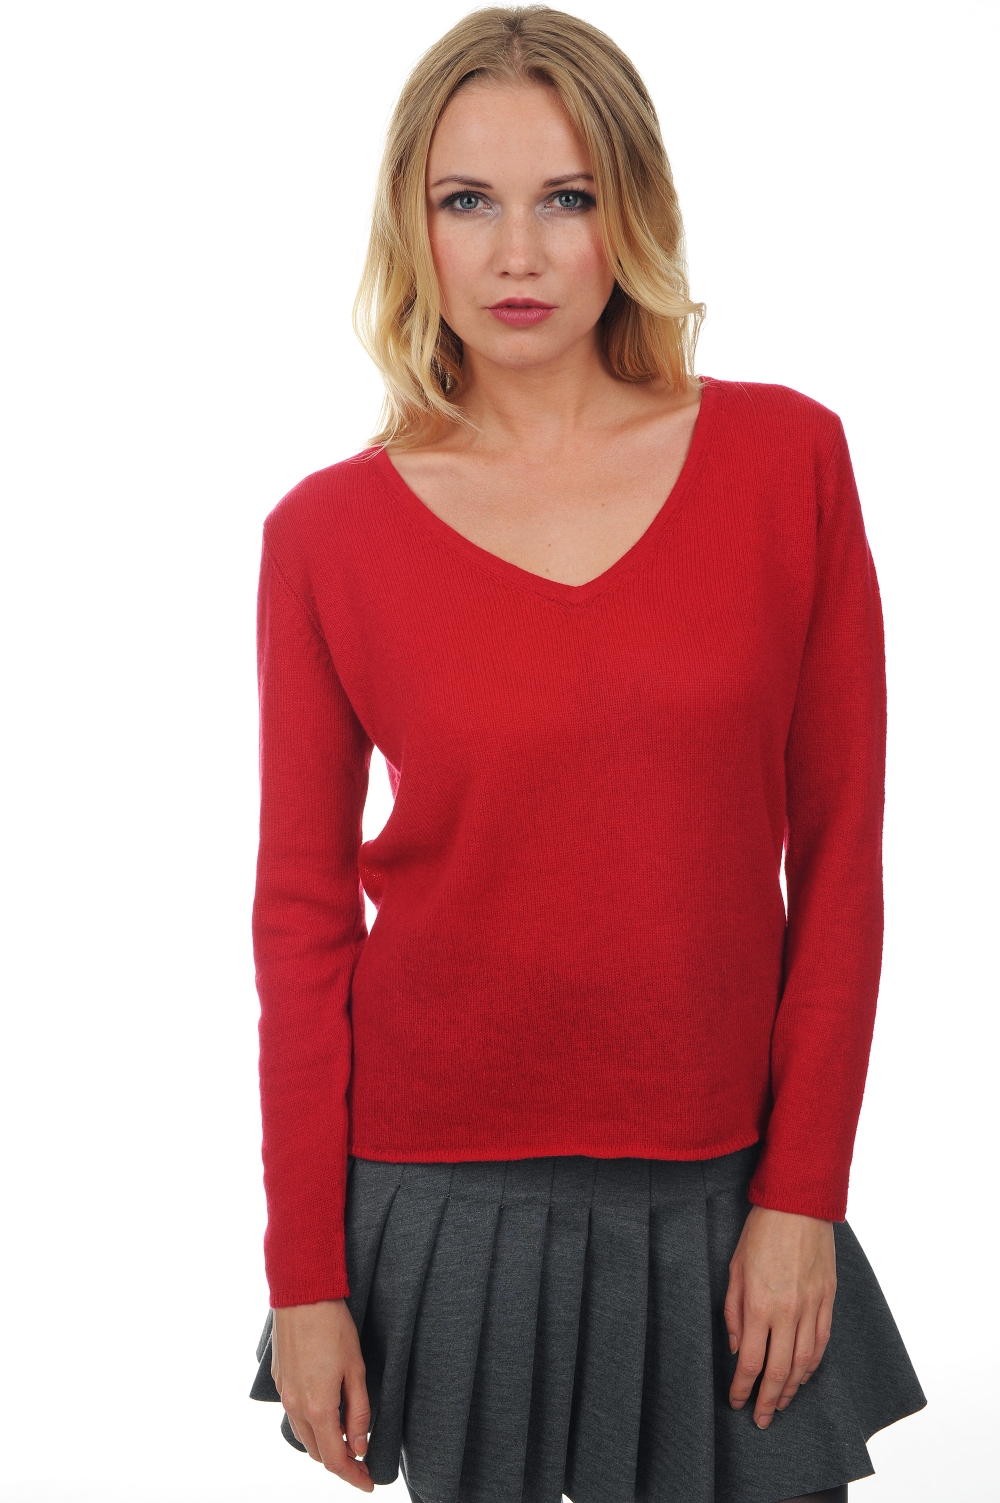 Cashmere cashmere donna essenziali low cost flavie rosso rubino xs